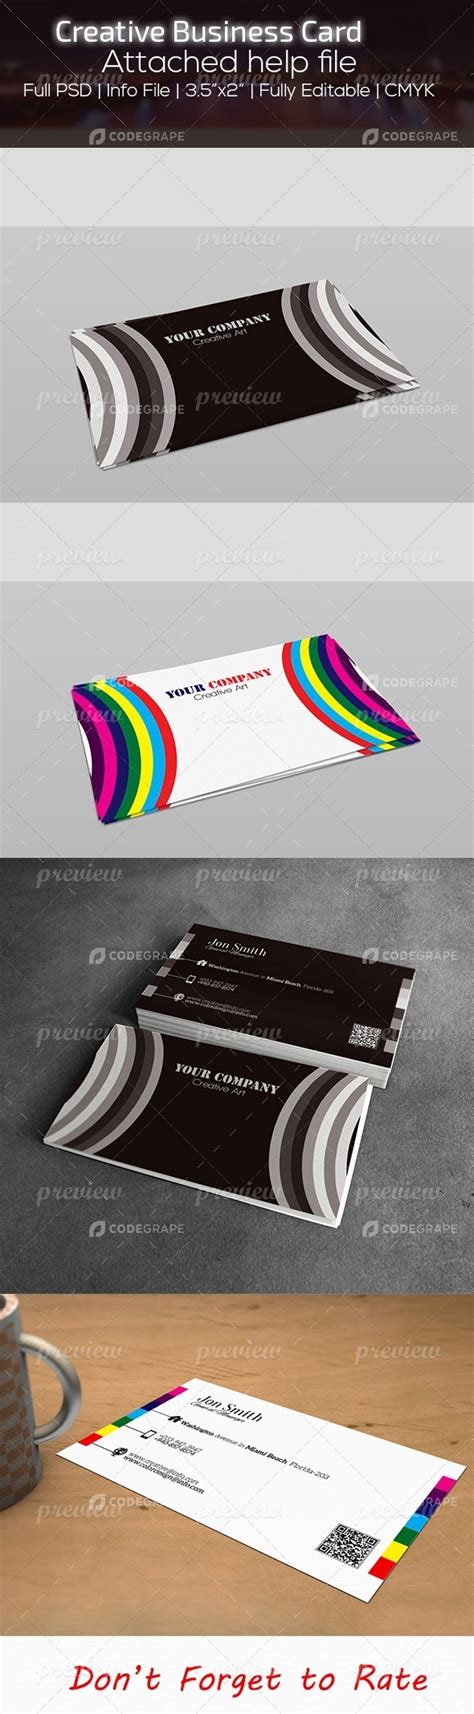 creative business card  prints codegrape